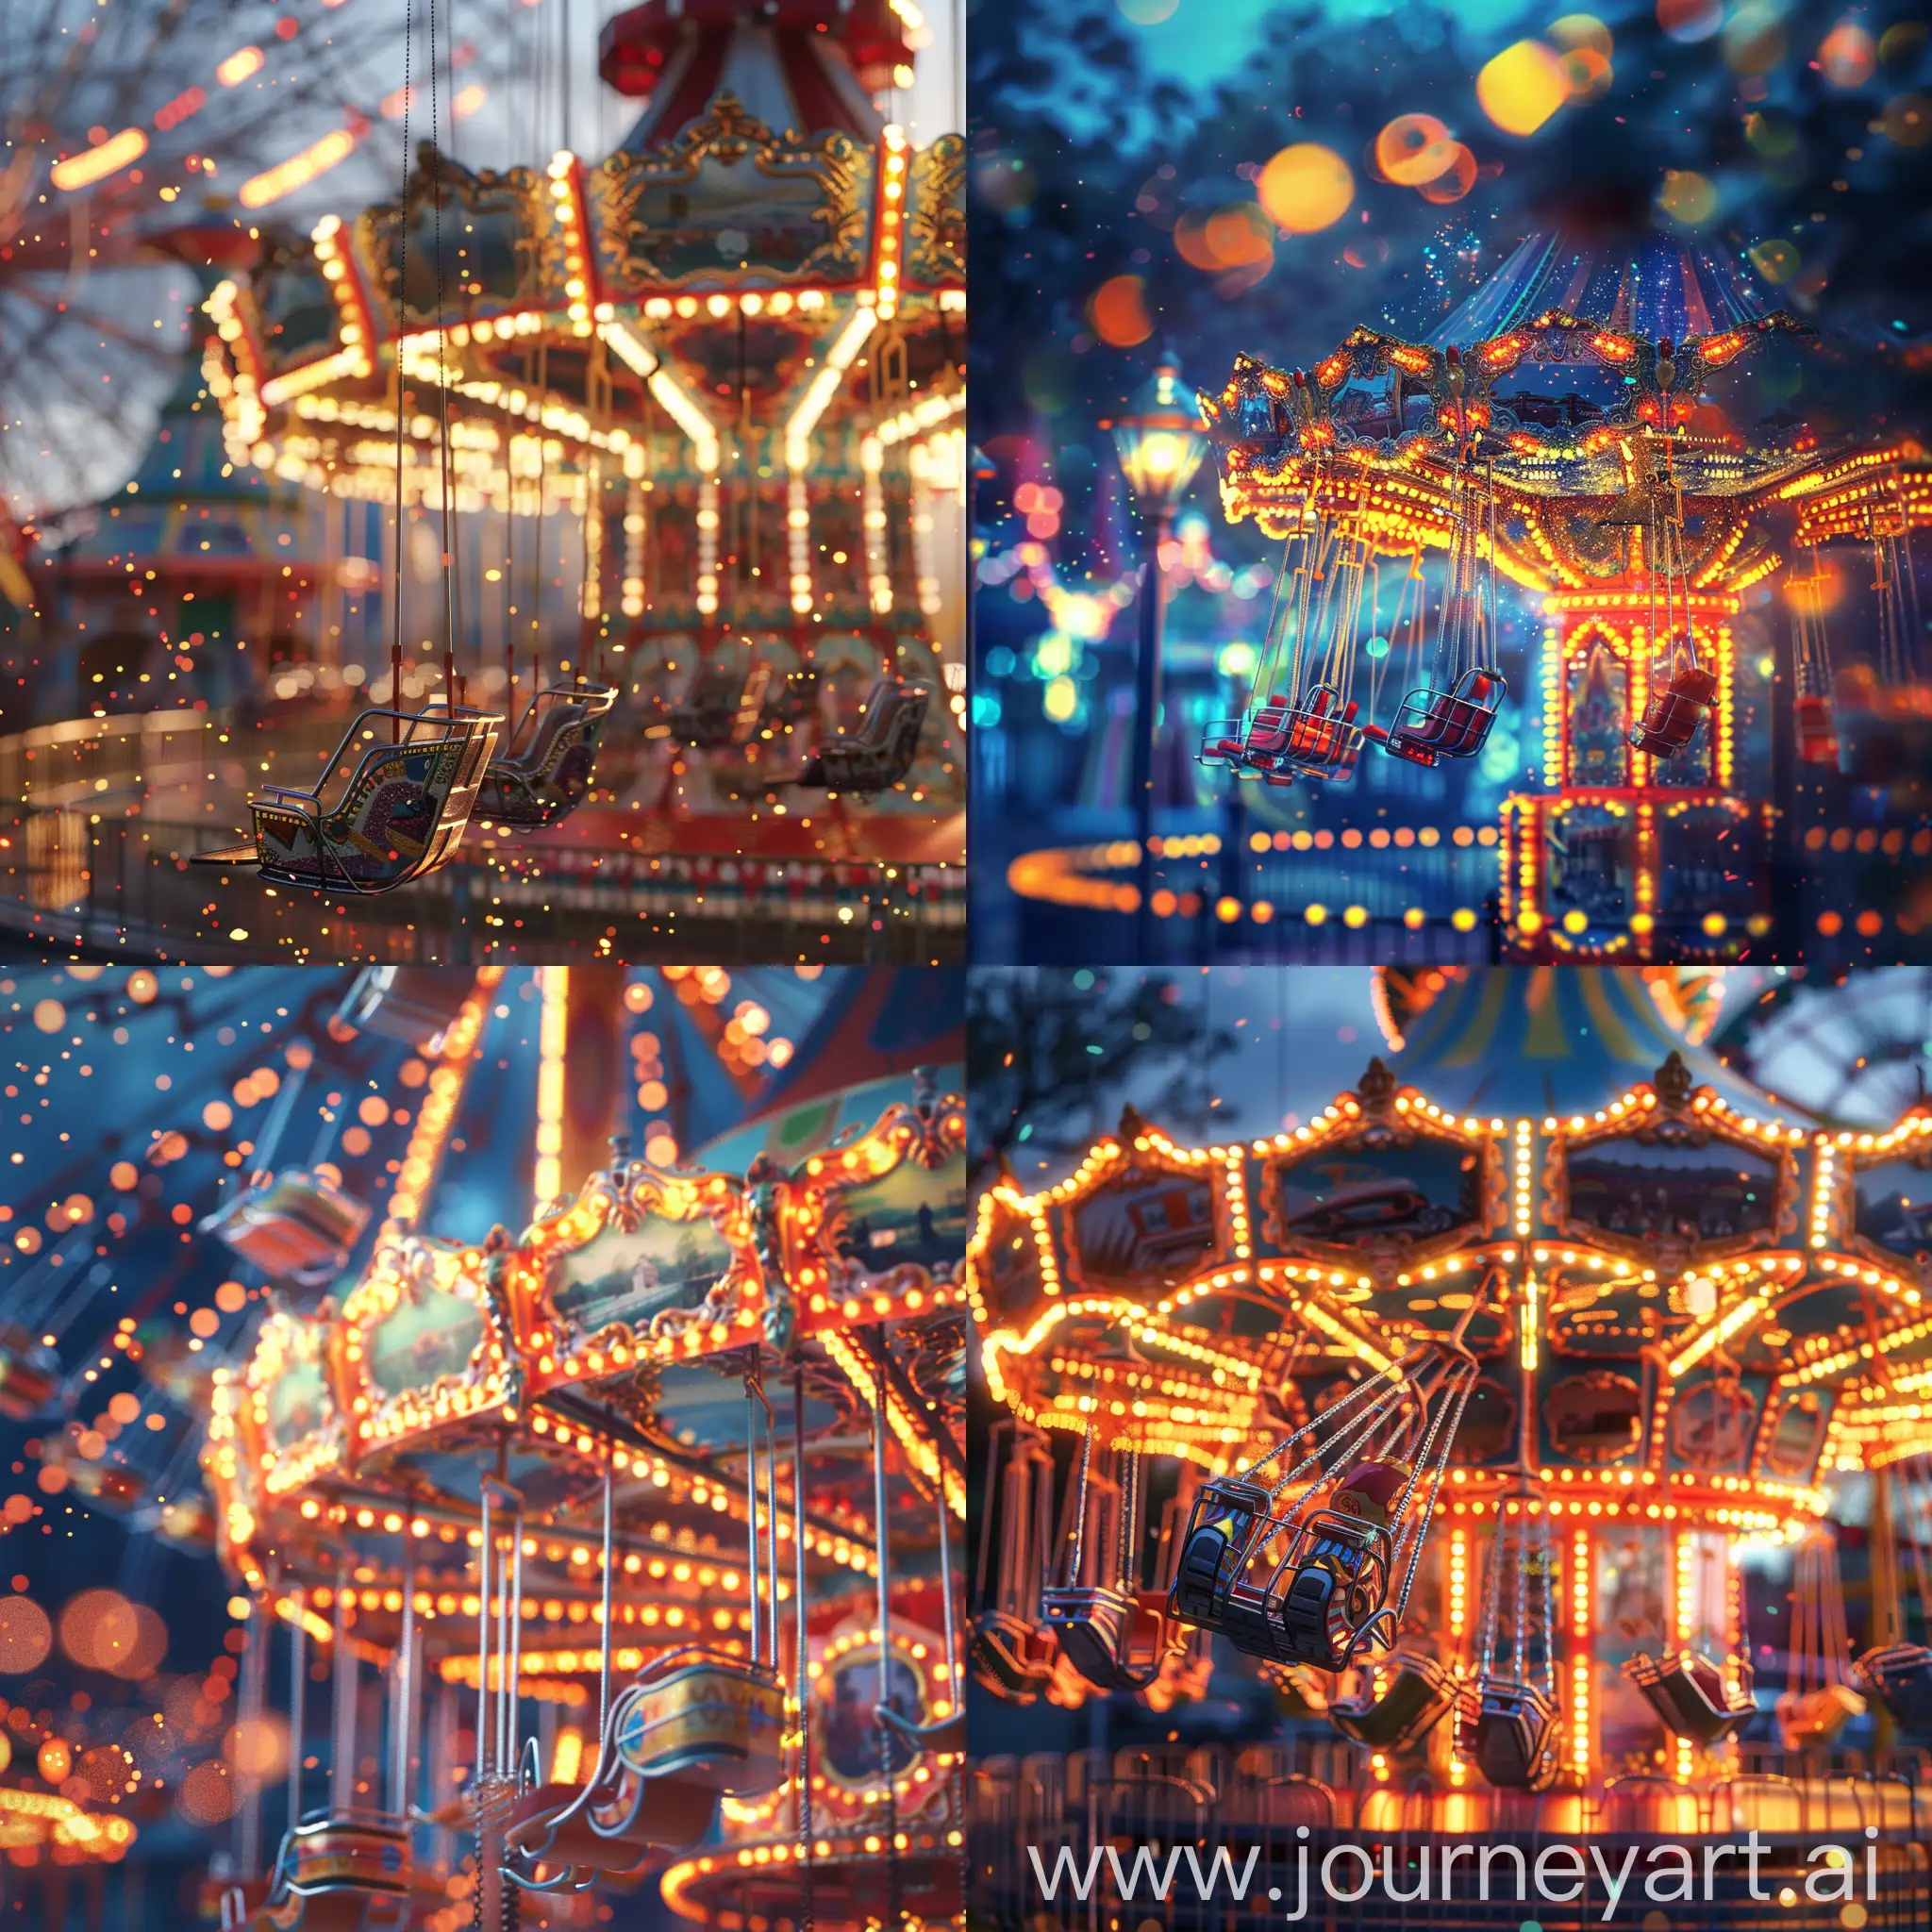 Vibrant-Amusement-Park-Scene-in-Mesmerizing-8K-Ultra-HD